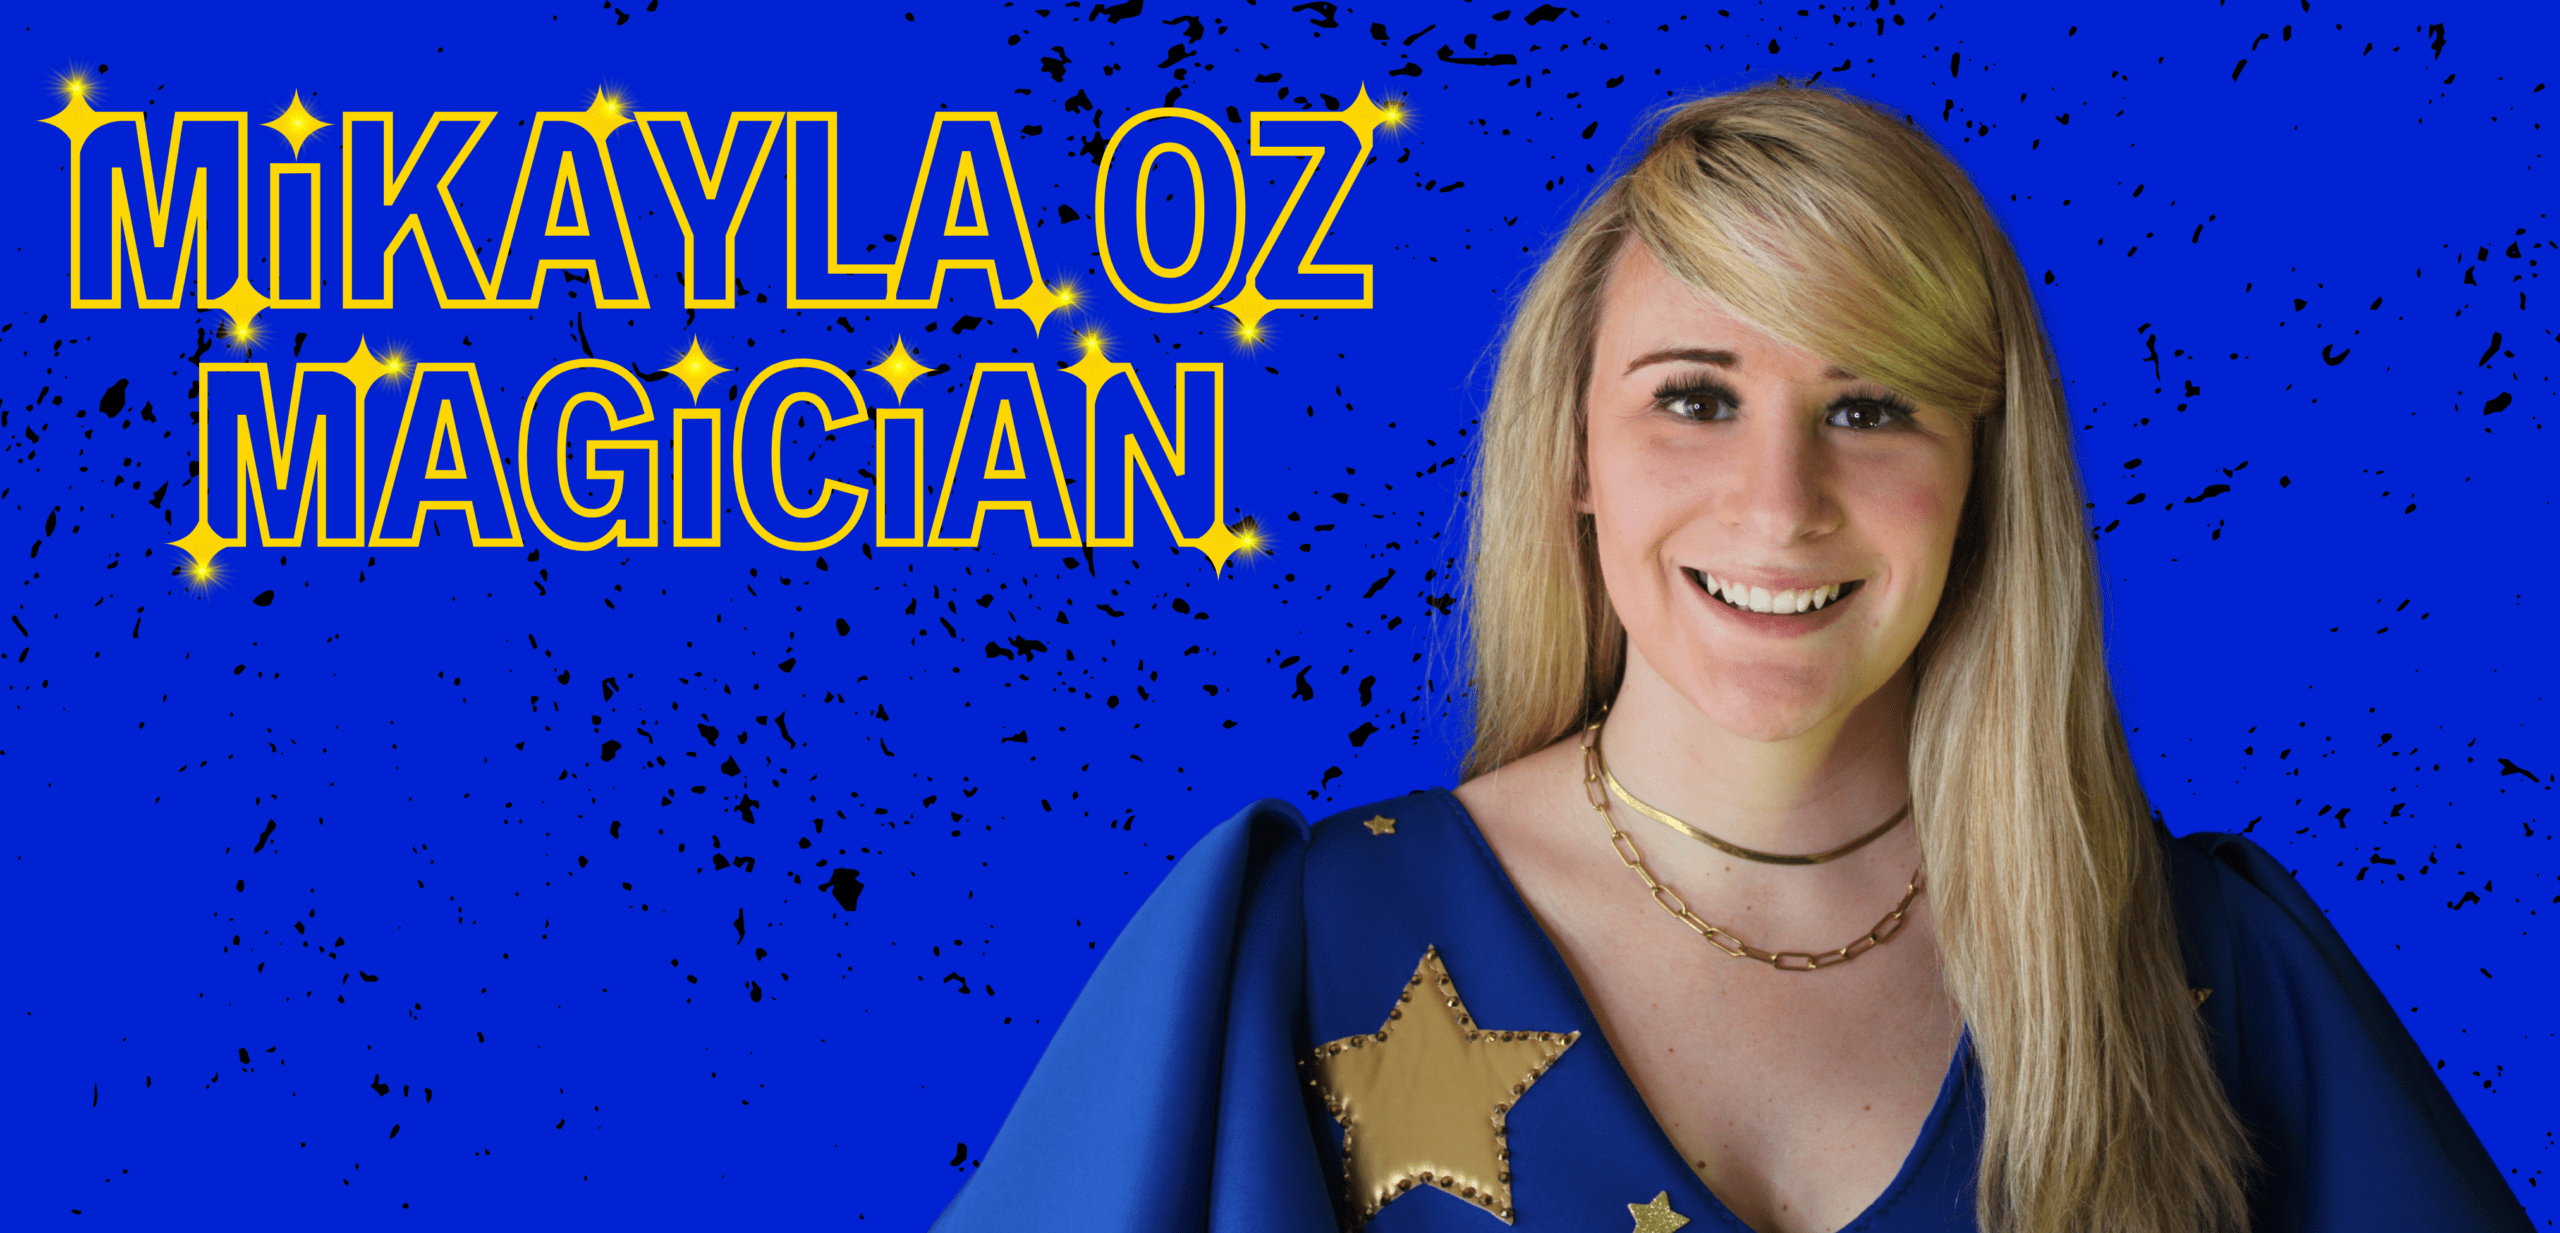 Magician in Iowa - Mikayla Oz